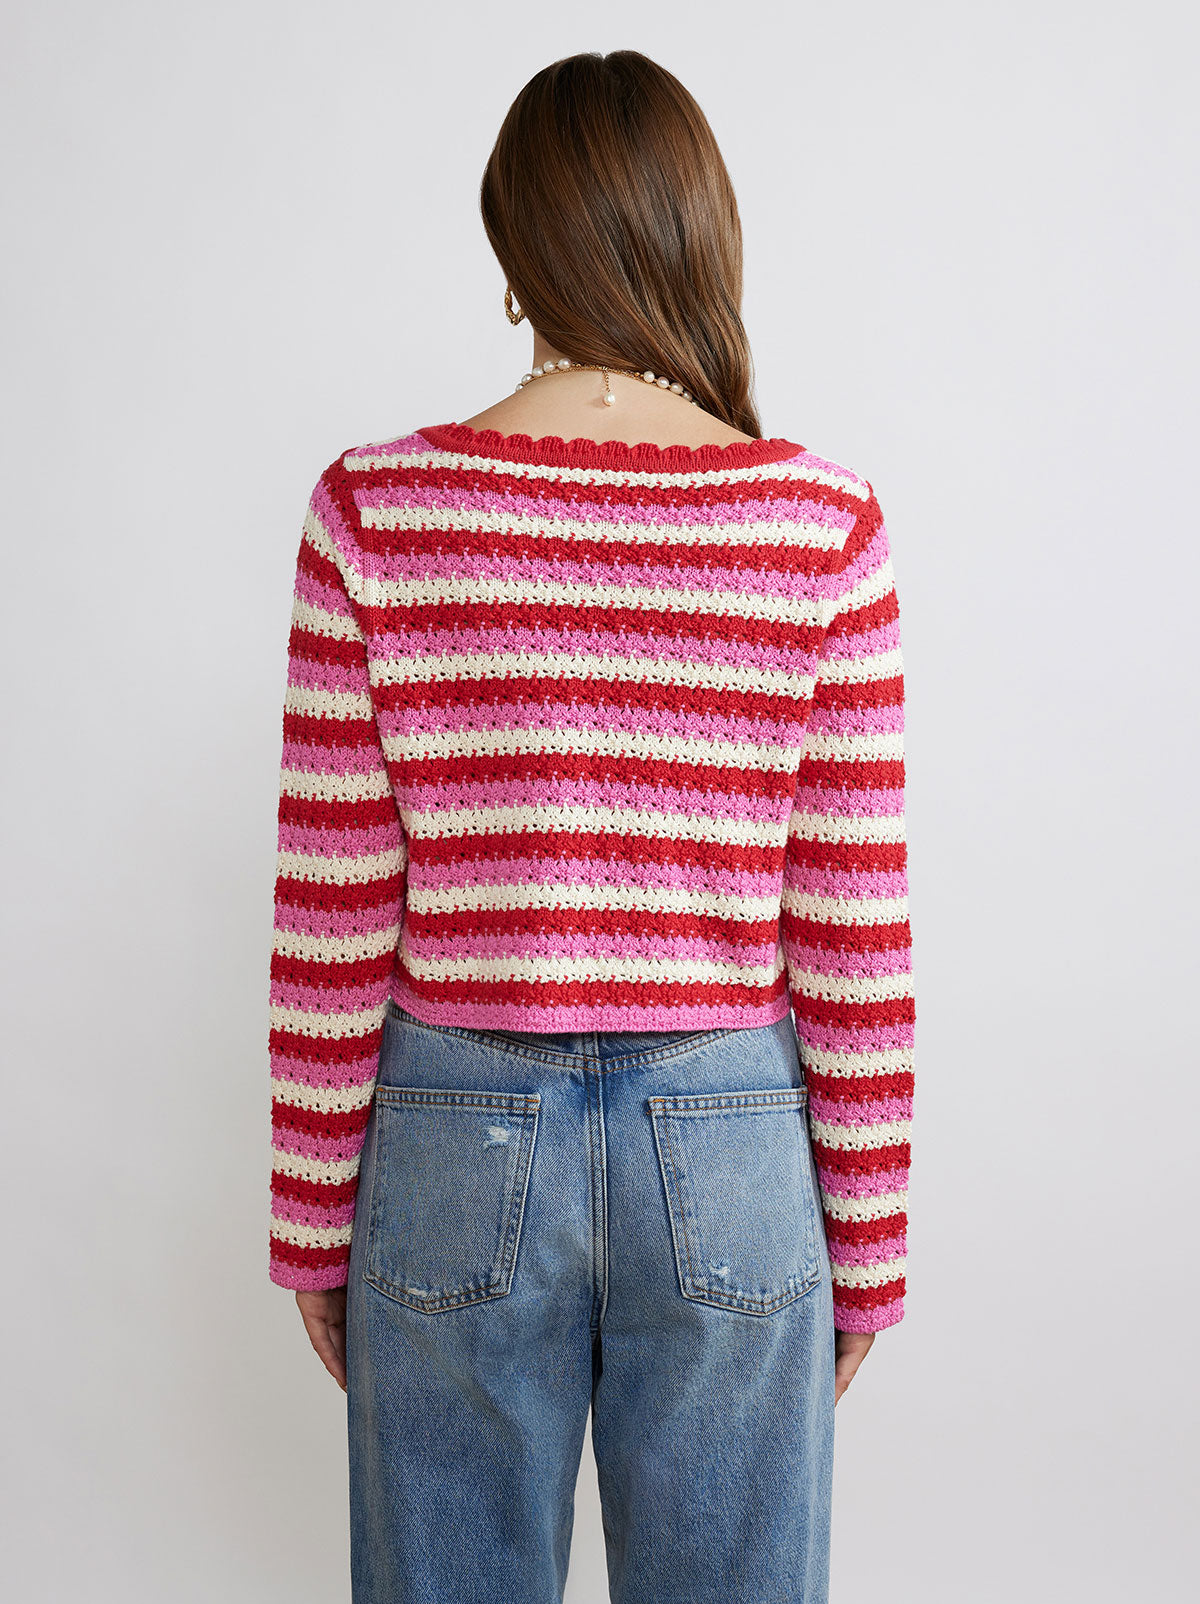 Dionne Pink Stripe Knit Cardigan by KITRI Studio